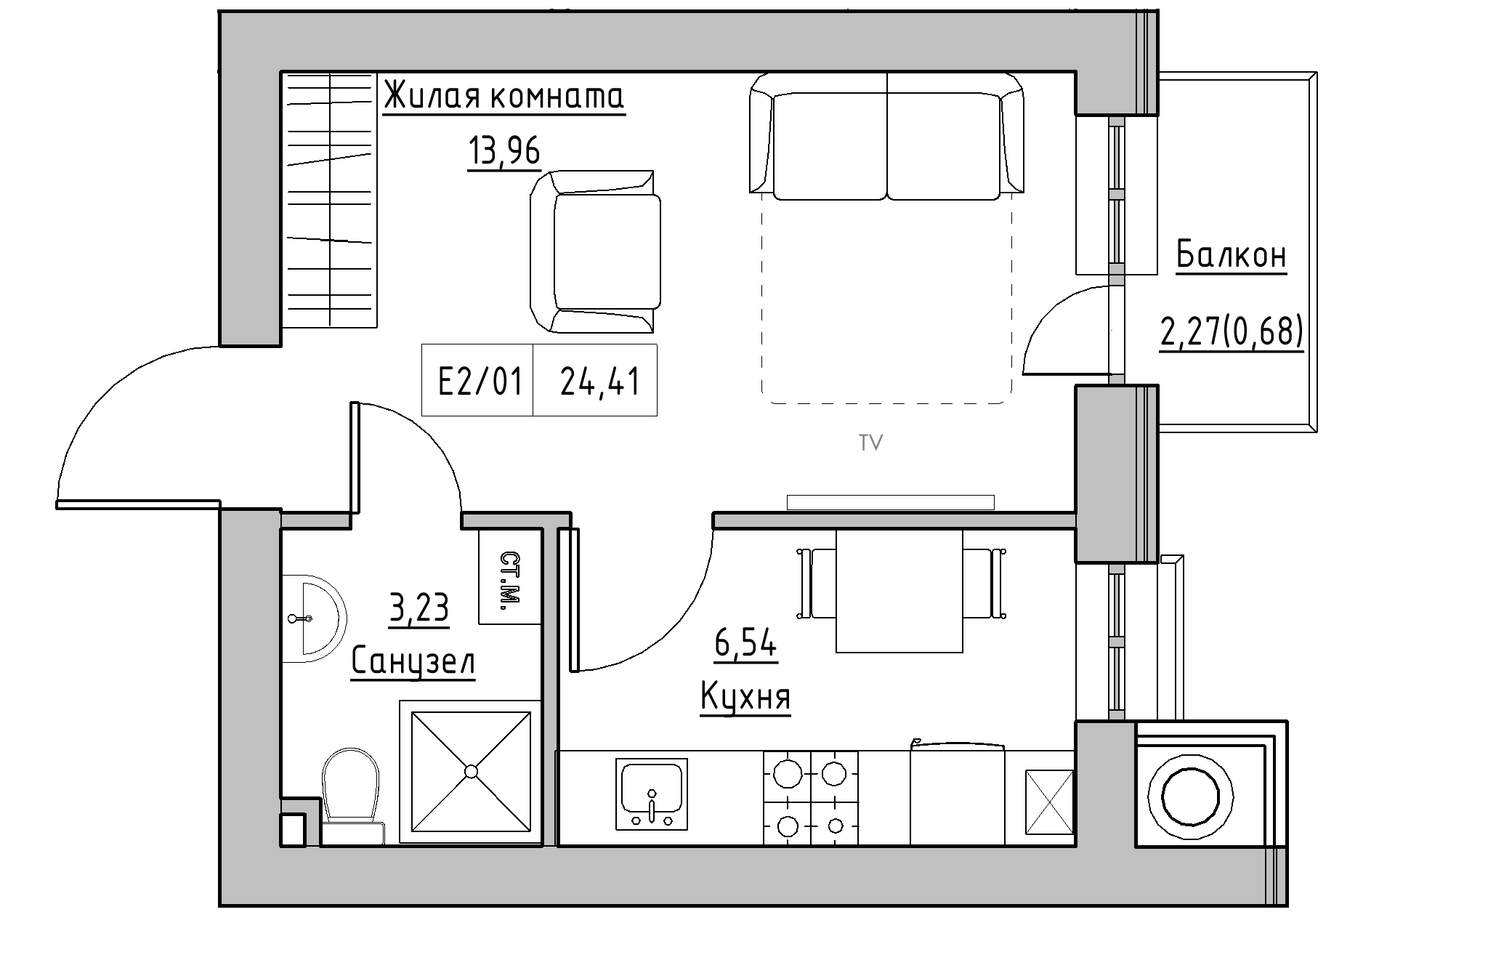 Planning 1-rm flats area 24.41m2, KS-010-03/0009.